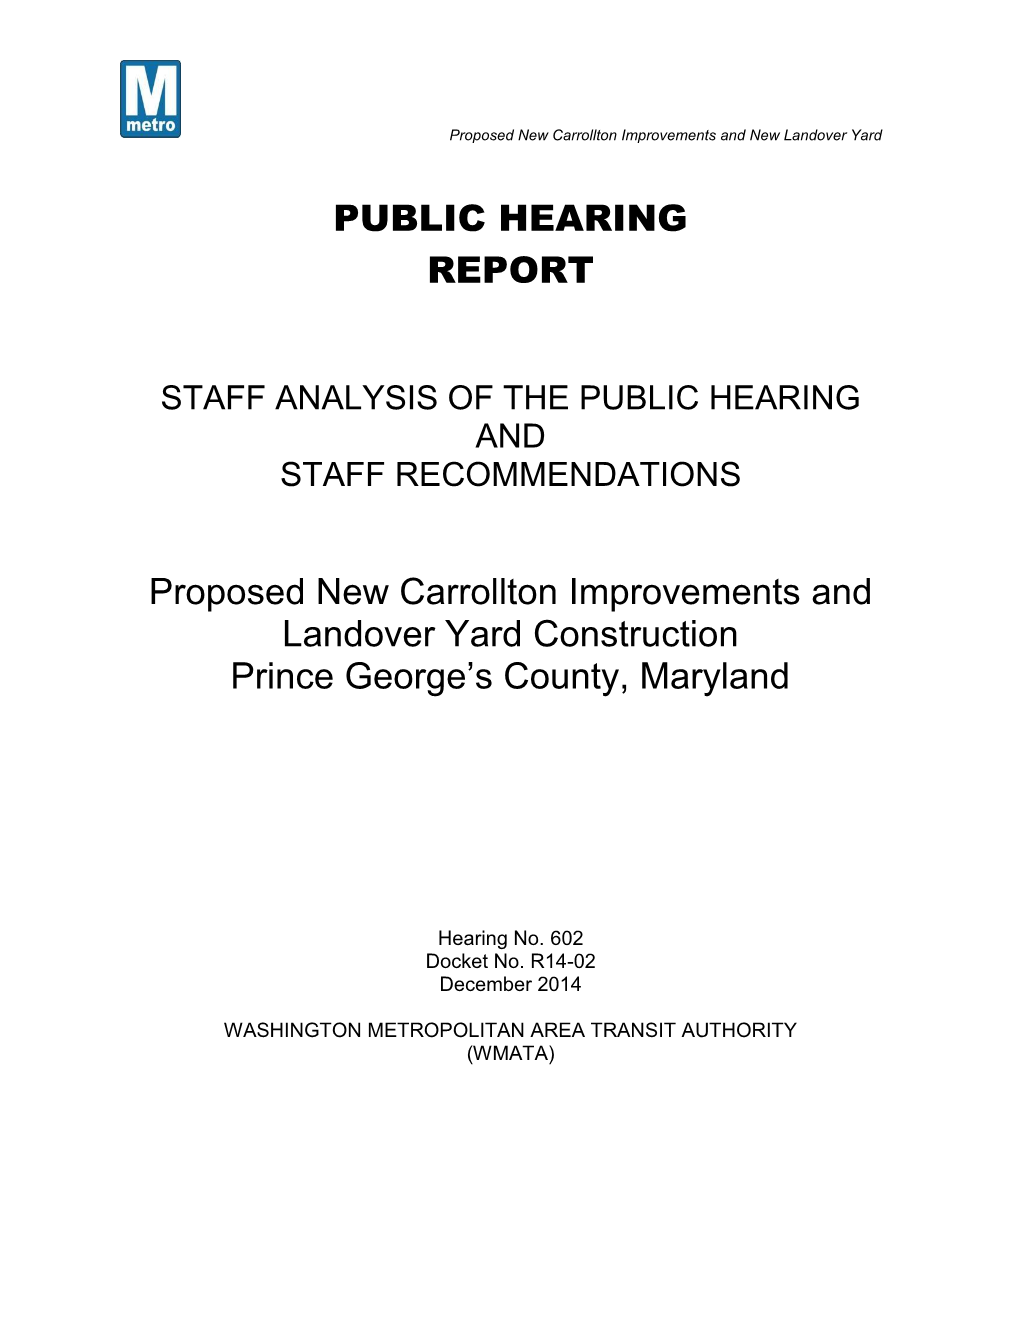 PUBLIC HEARING REPORT Proposed New Carrollton